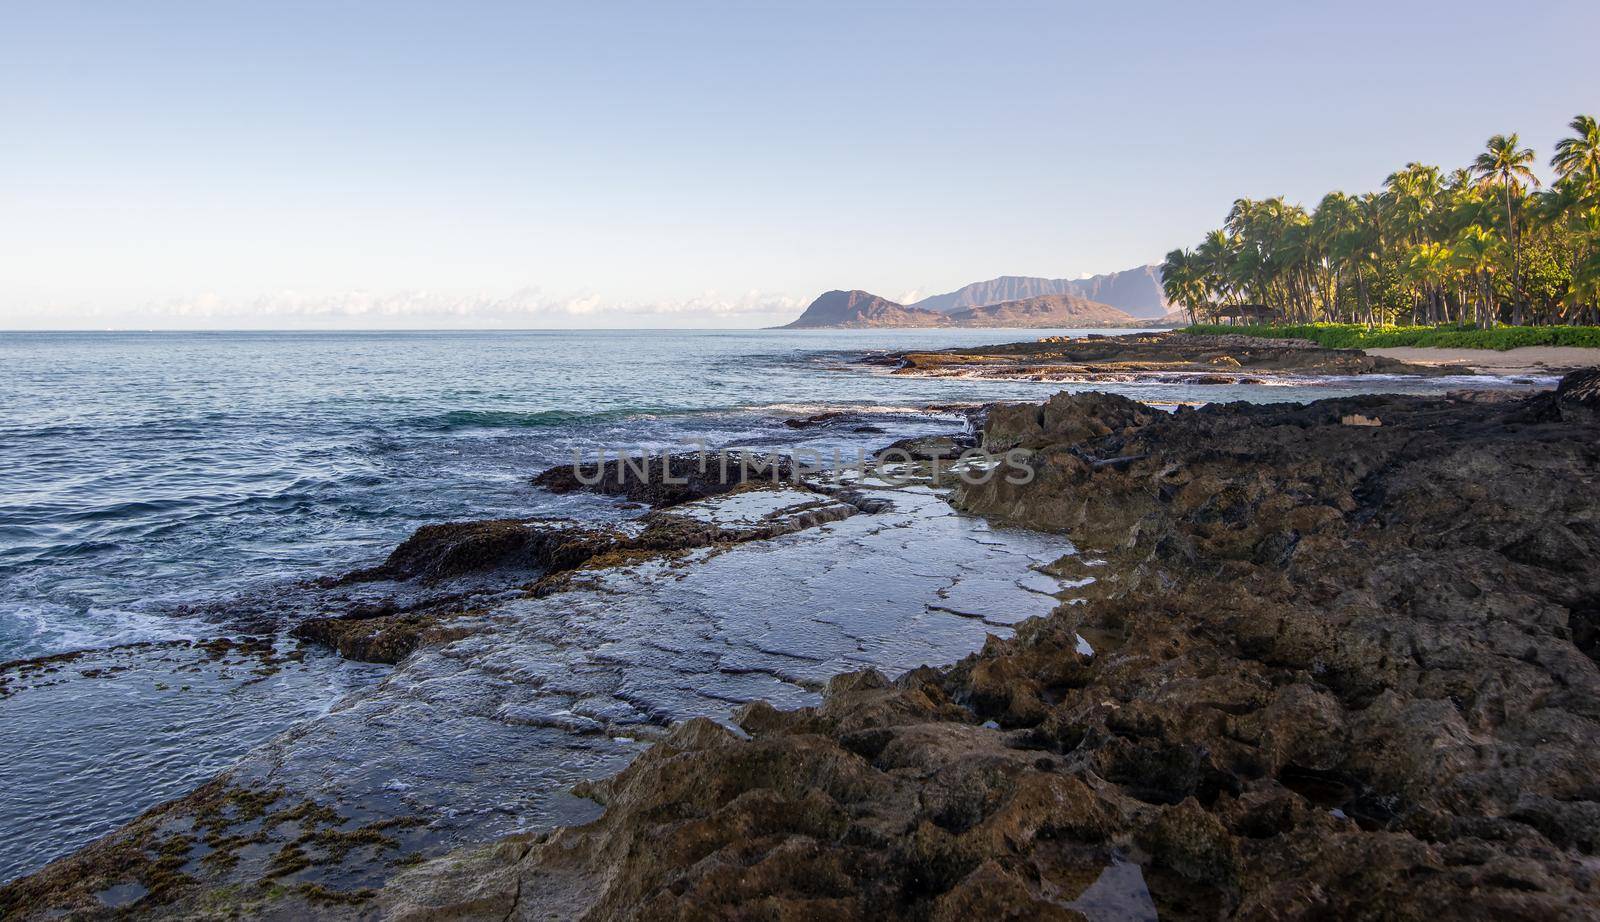 oahu hawaii secret beach lagoon near luxury resorts by digidreamgrafix